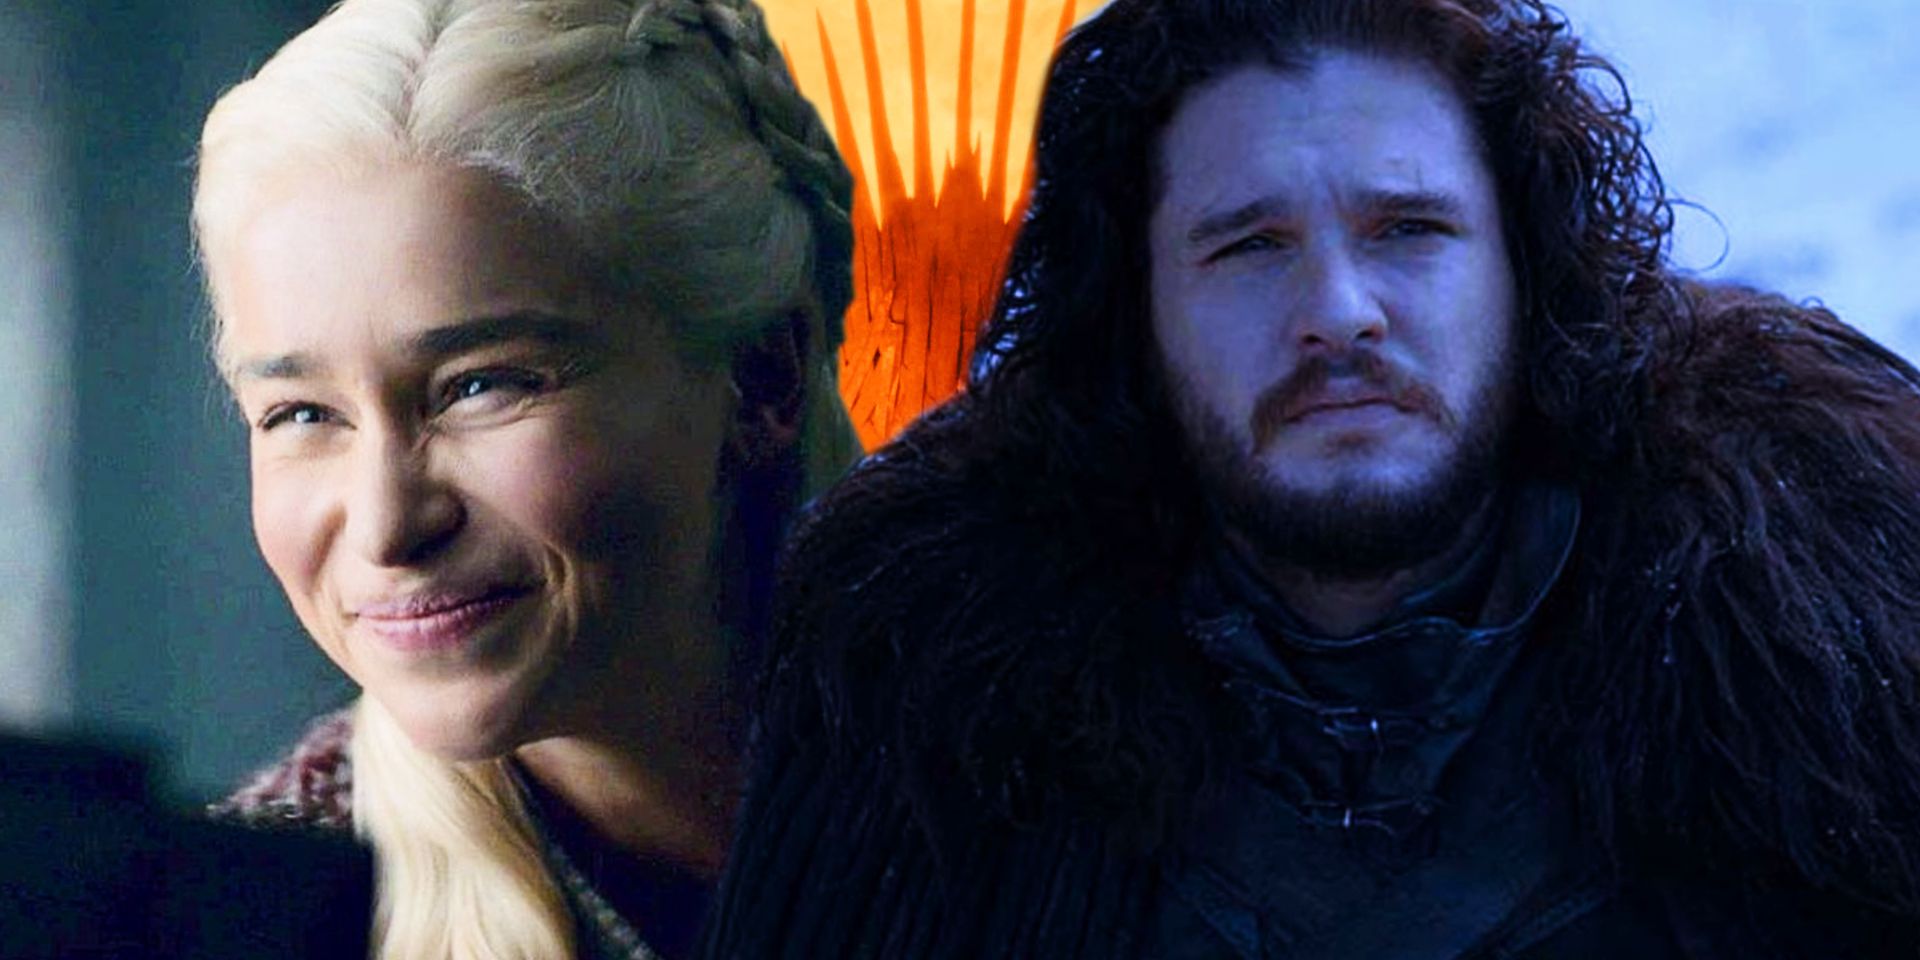 Emilia Clarke as Daenerys, Kit Harington as Jon Snow, and the Iron Throne in Game of Thrones finale